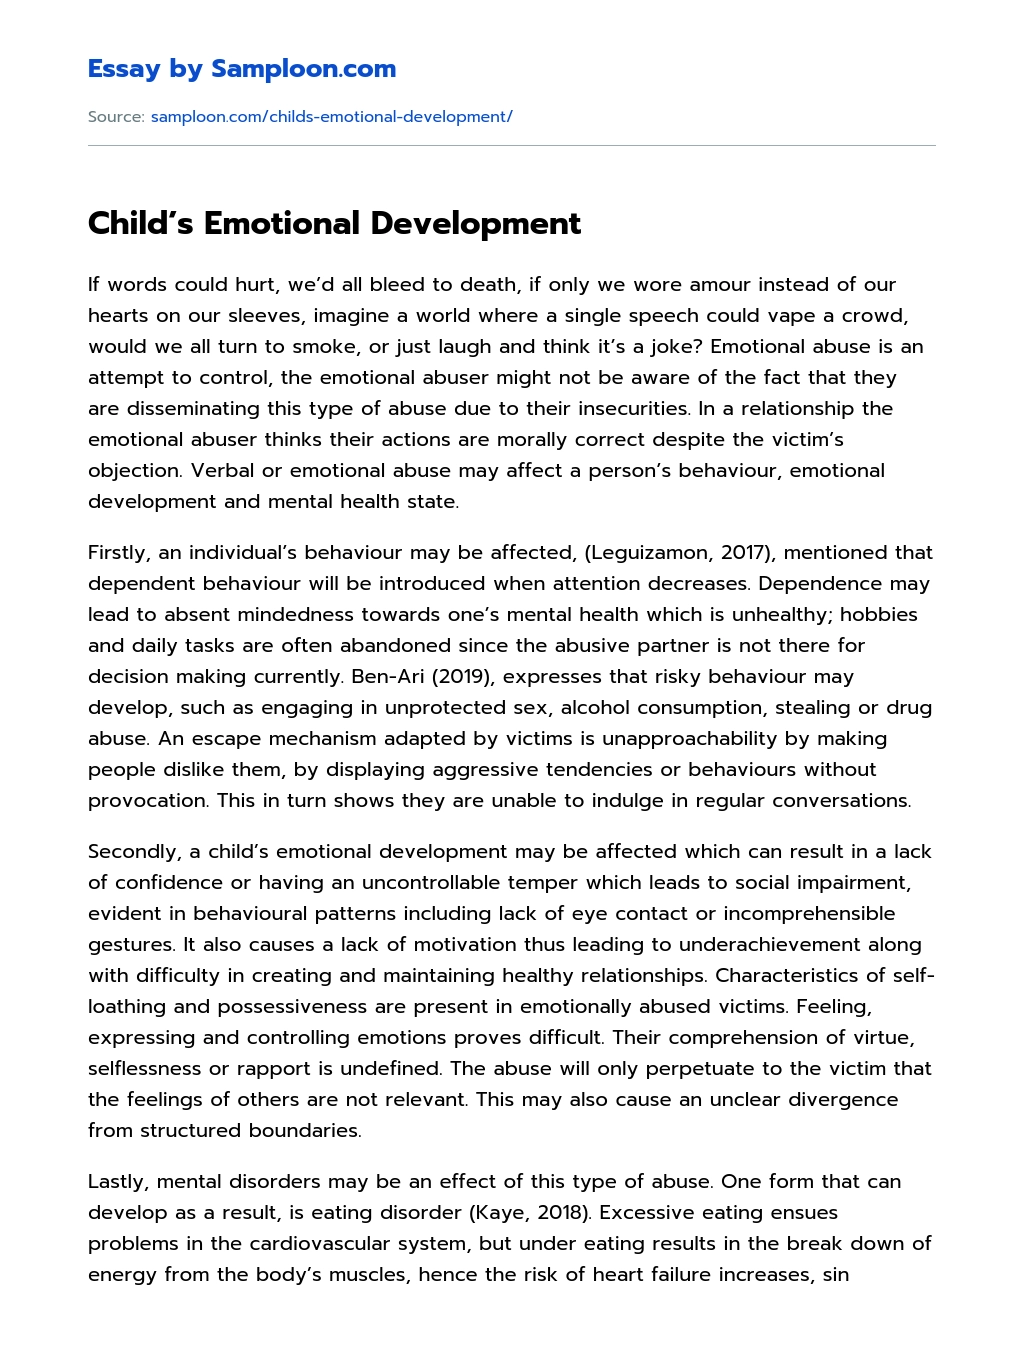 Child’s Emotional Development essay